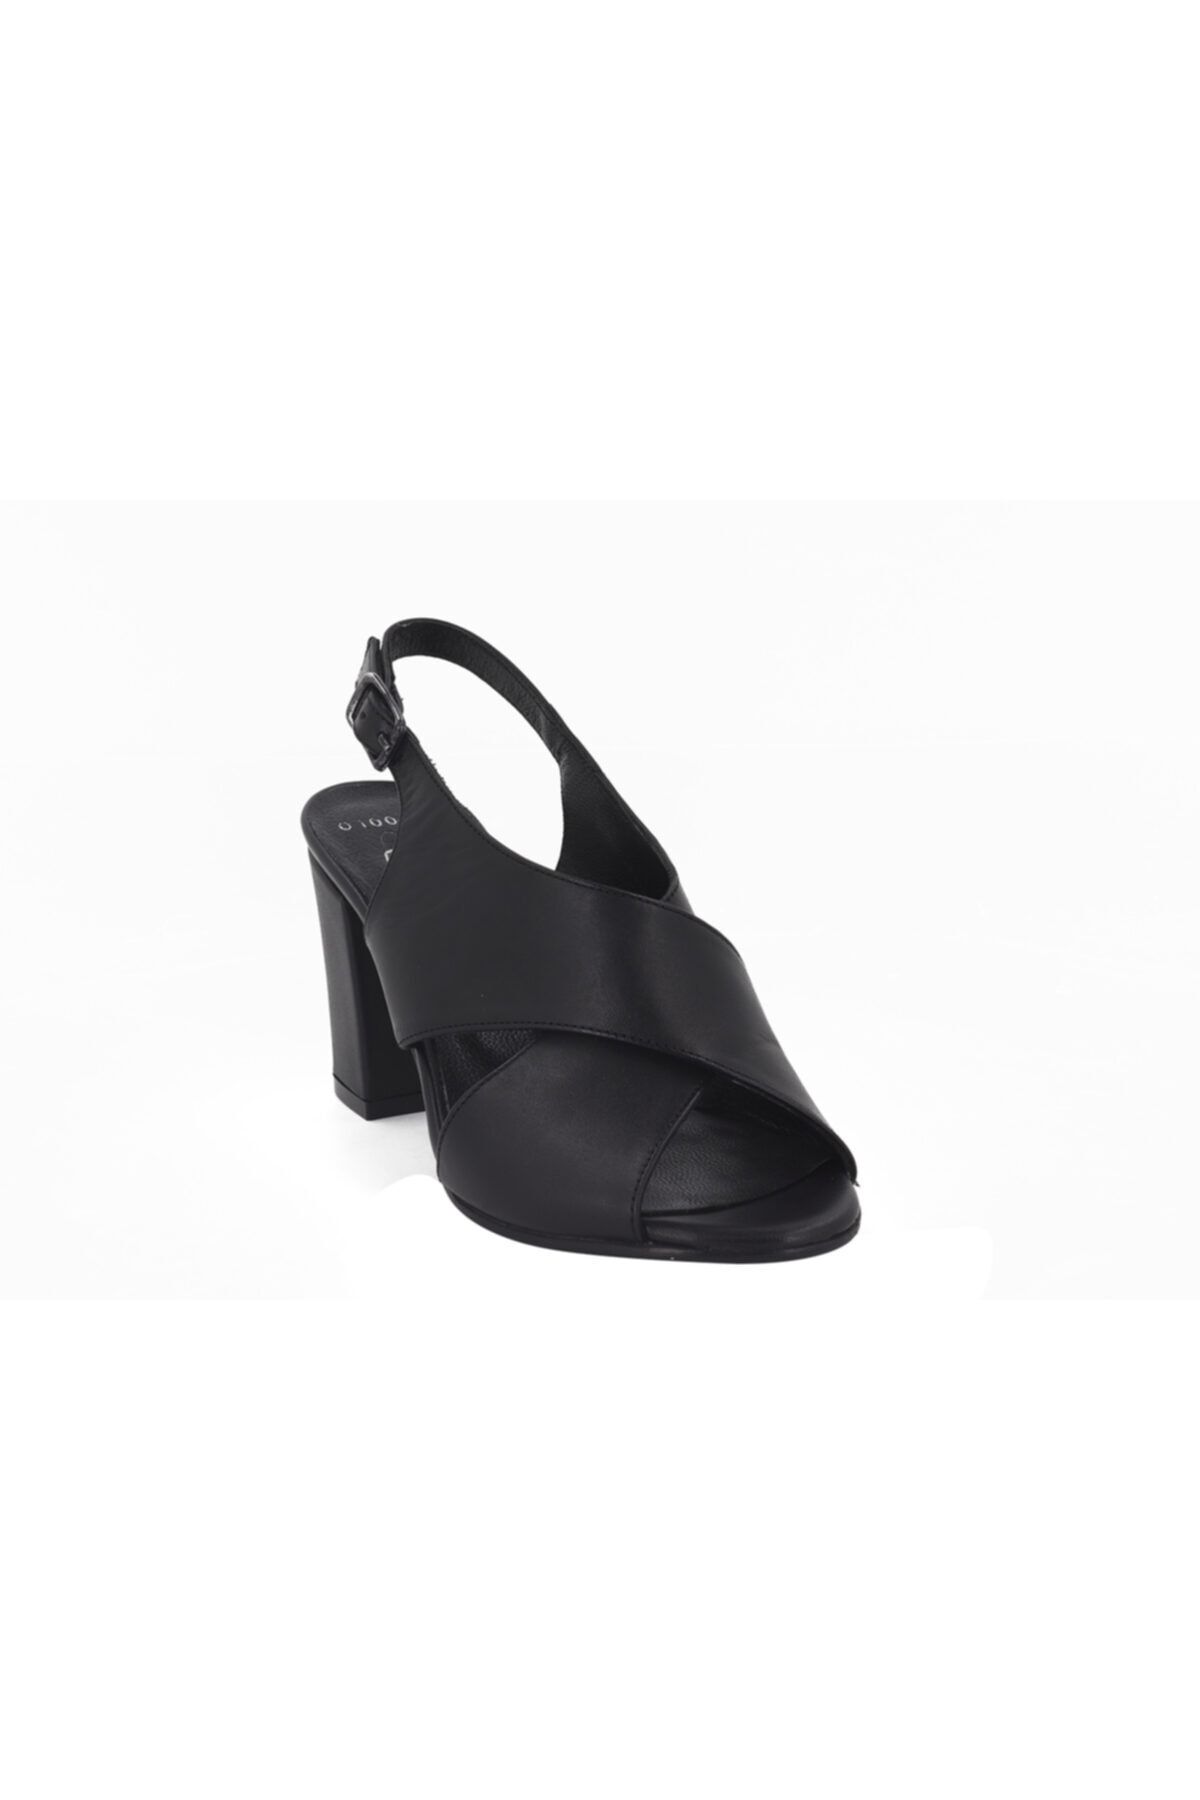 Hobby Siyah Topuklu Kadın Ayakkabı Lp0100